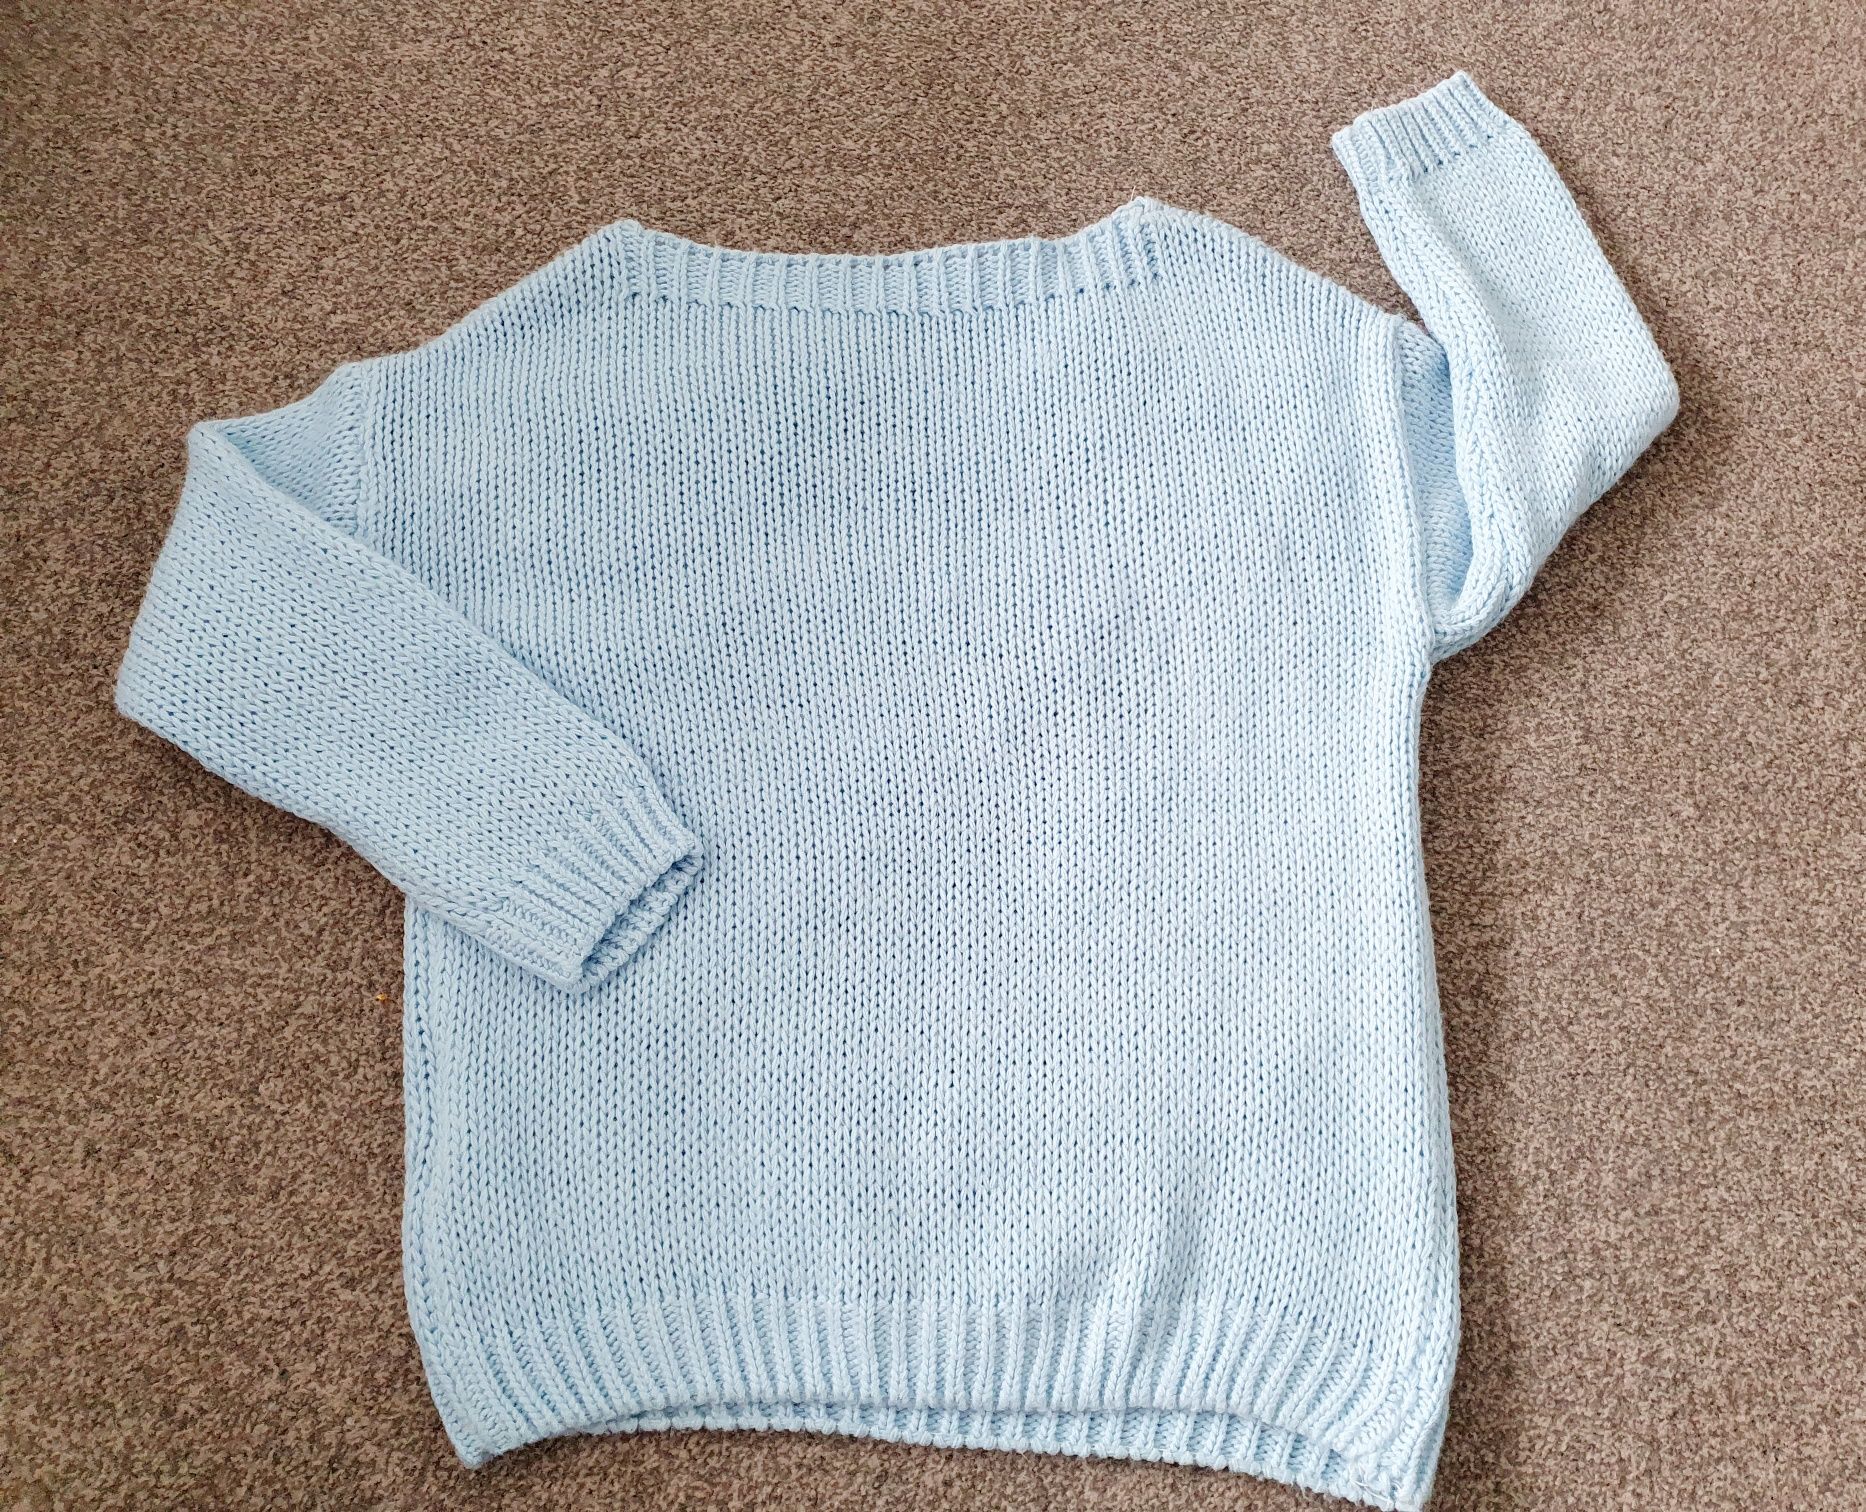 Pastelowy błękitny jasnoniebieski sweter 36 s 38 m